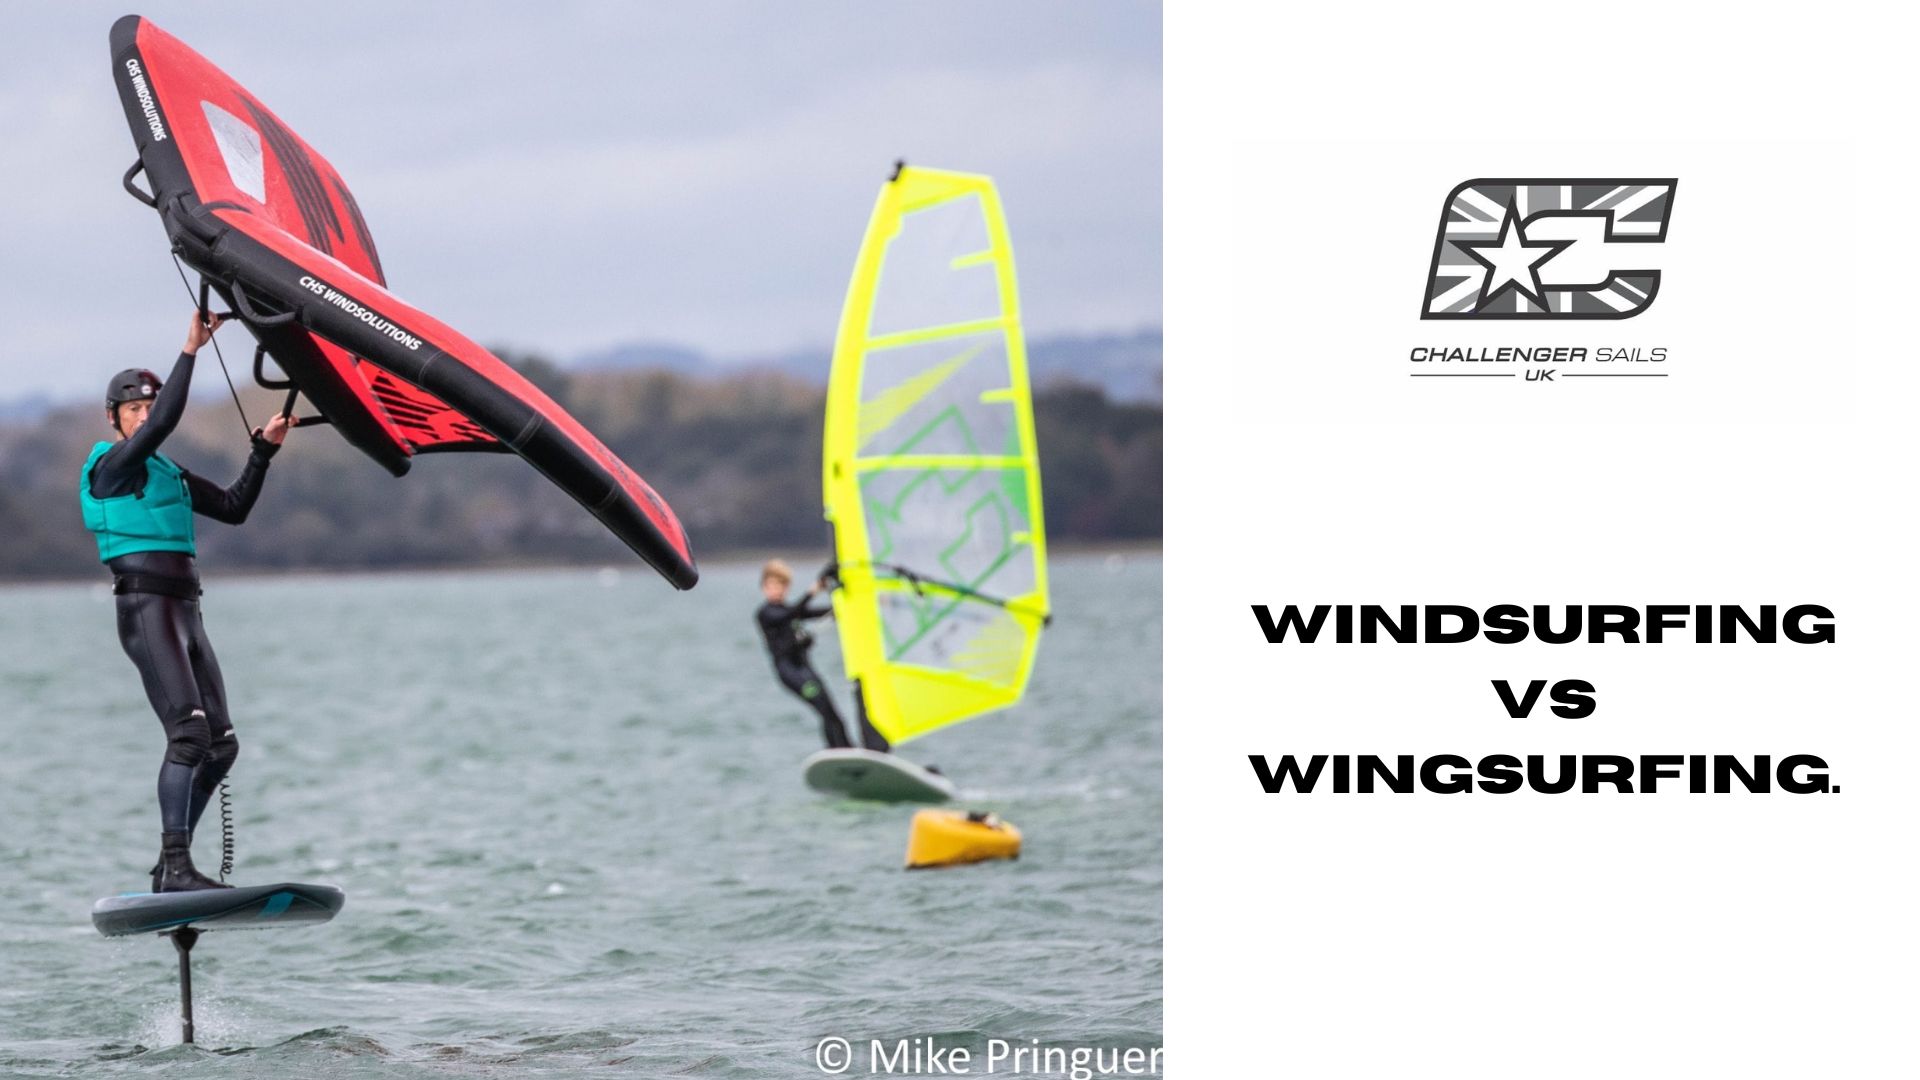 Windsurfing vs wingsurfing.